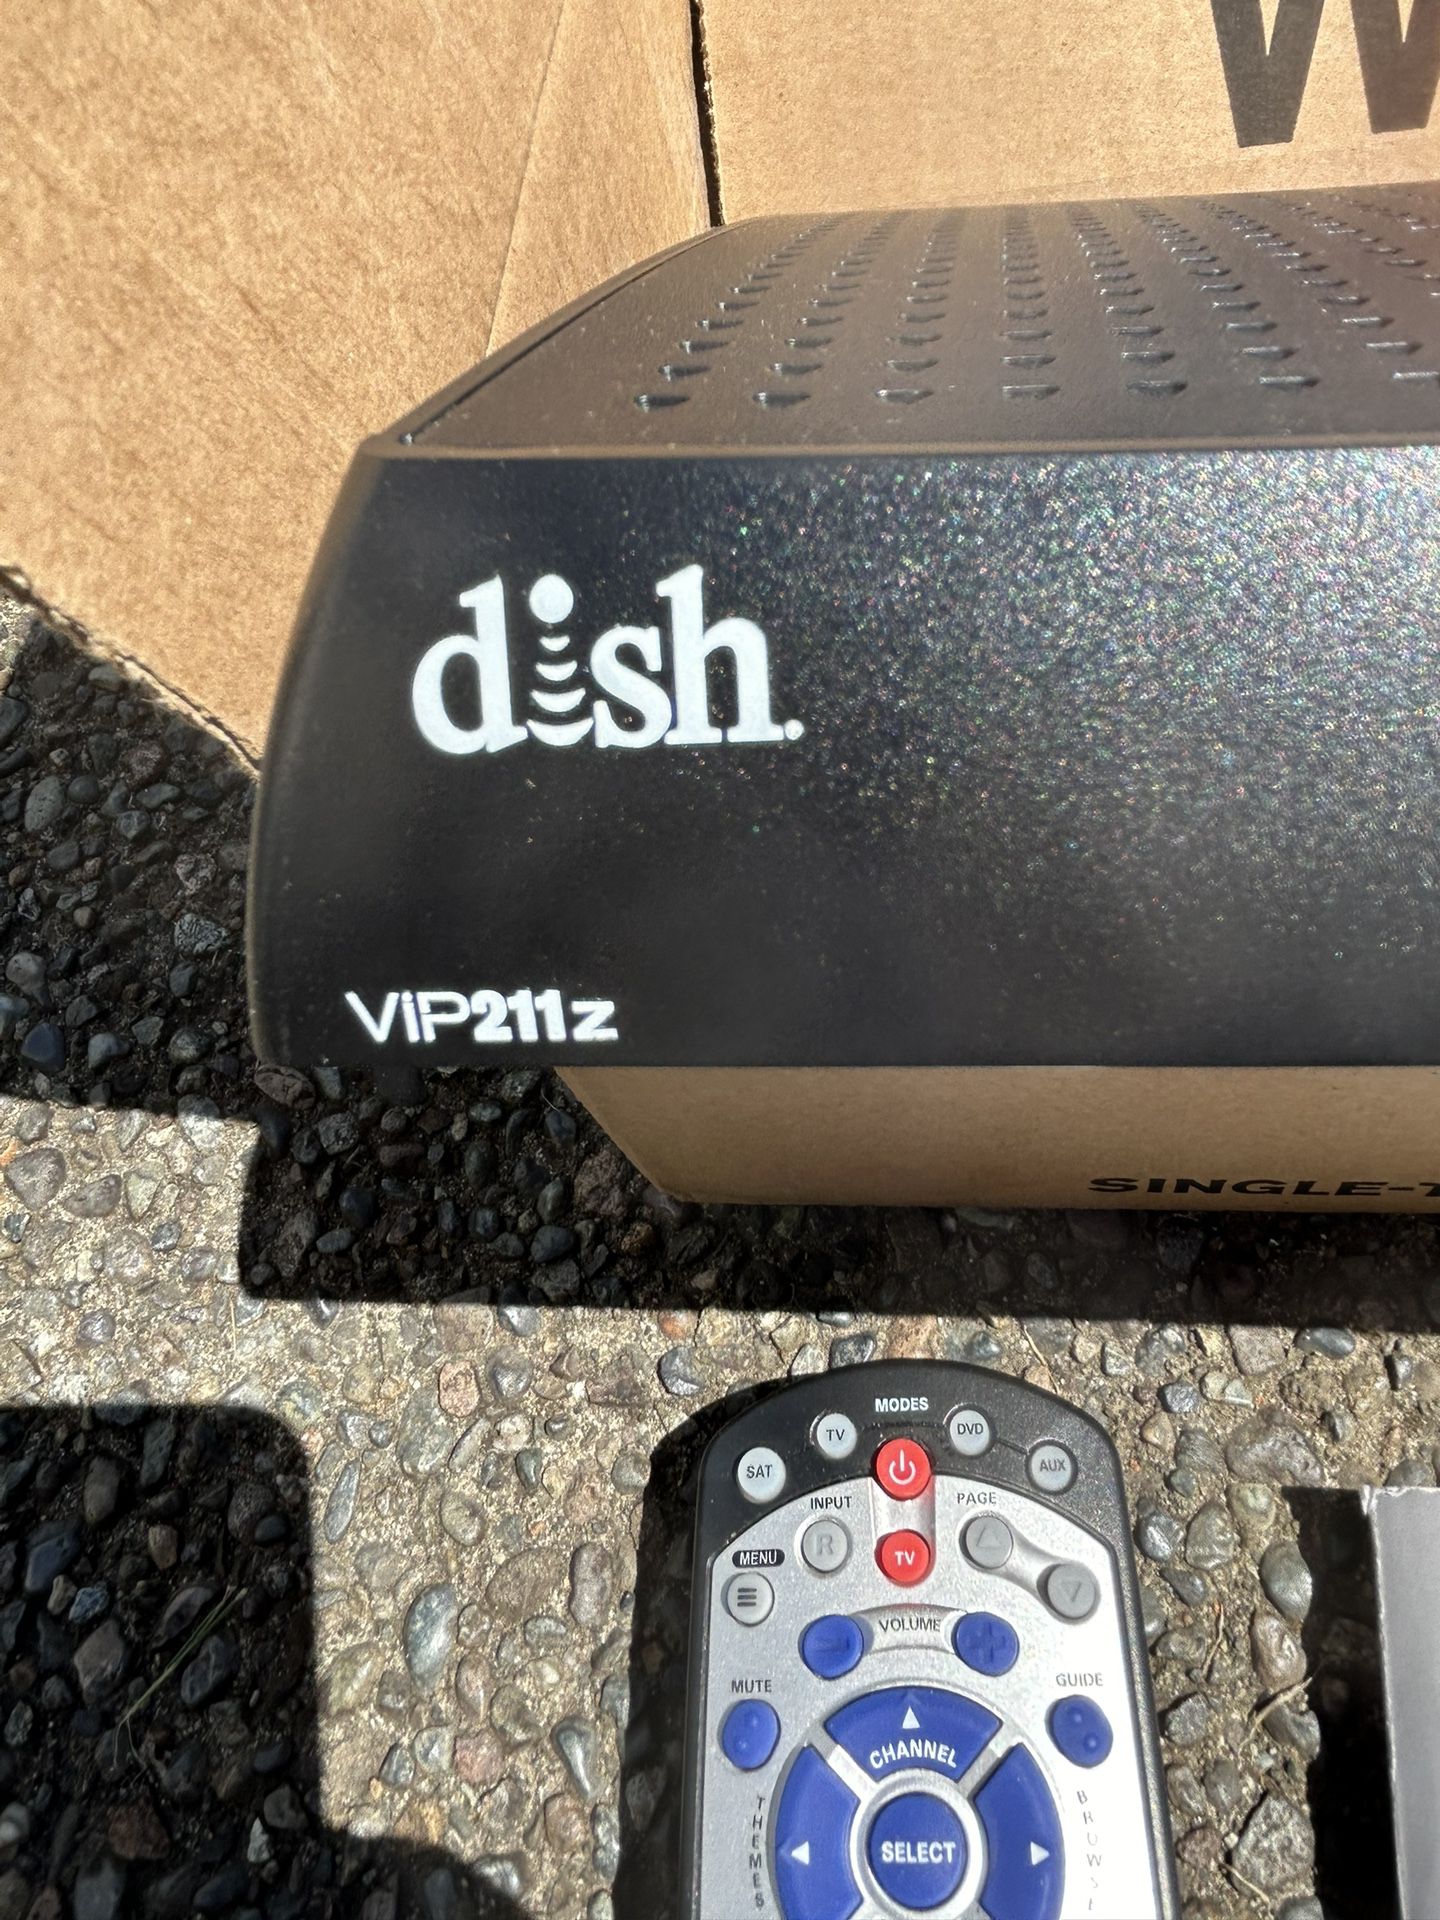 Dish Wally Satellite Receiver